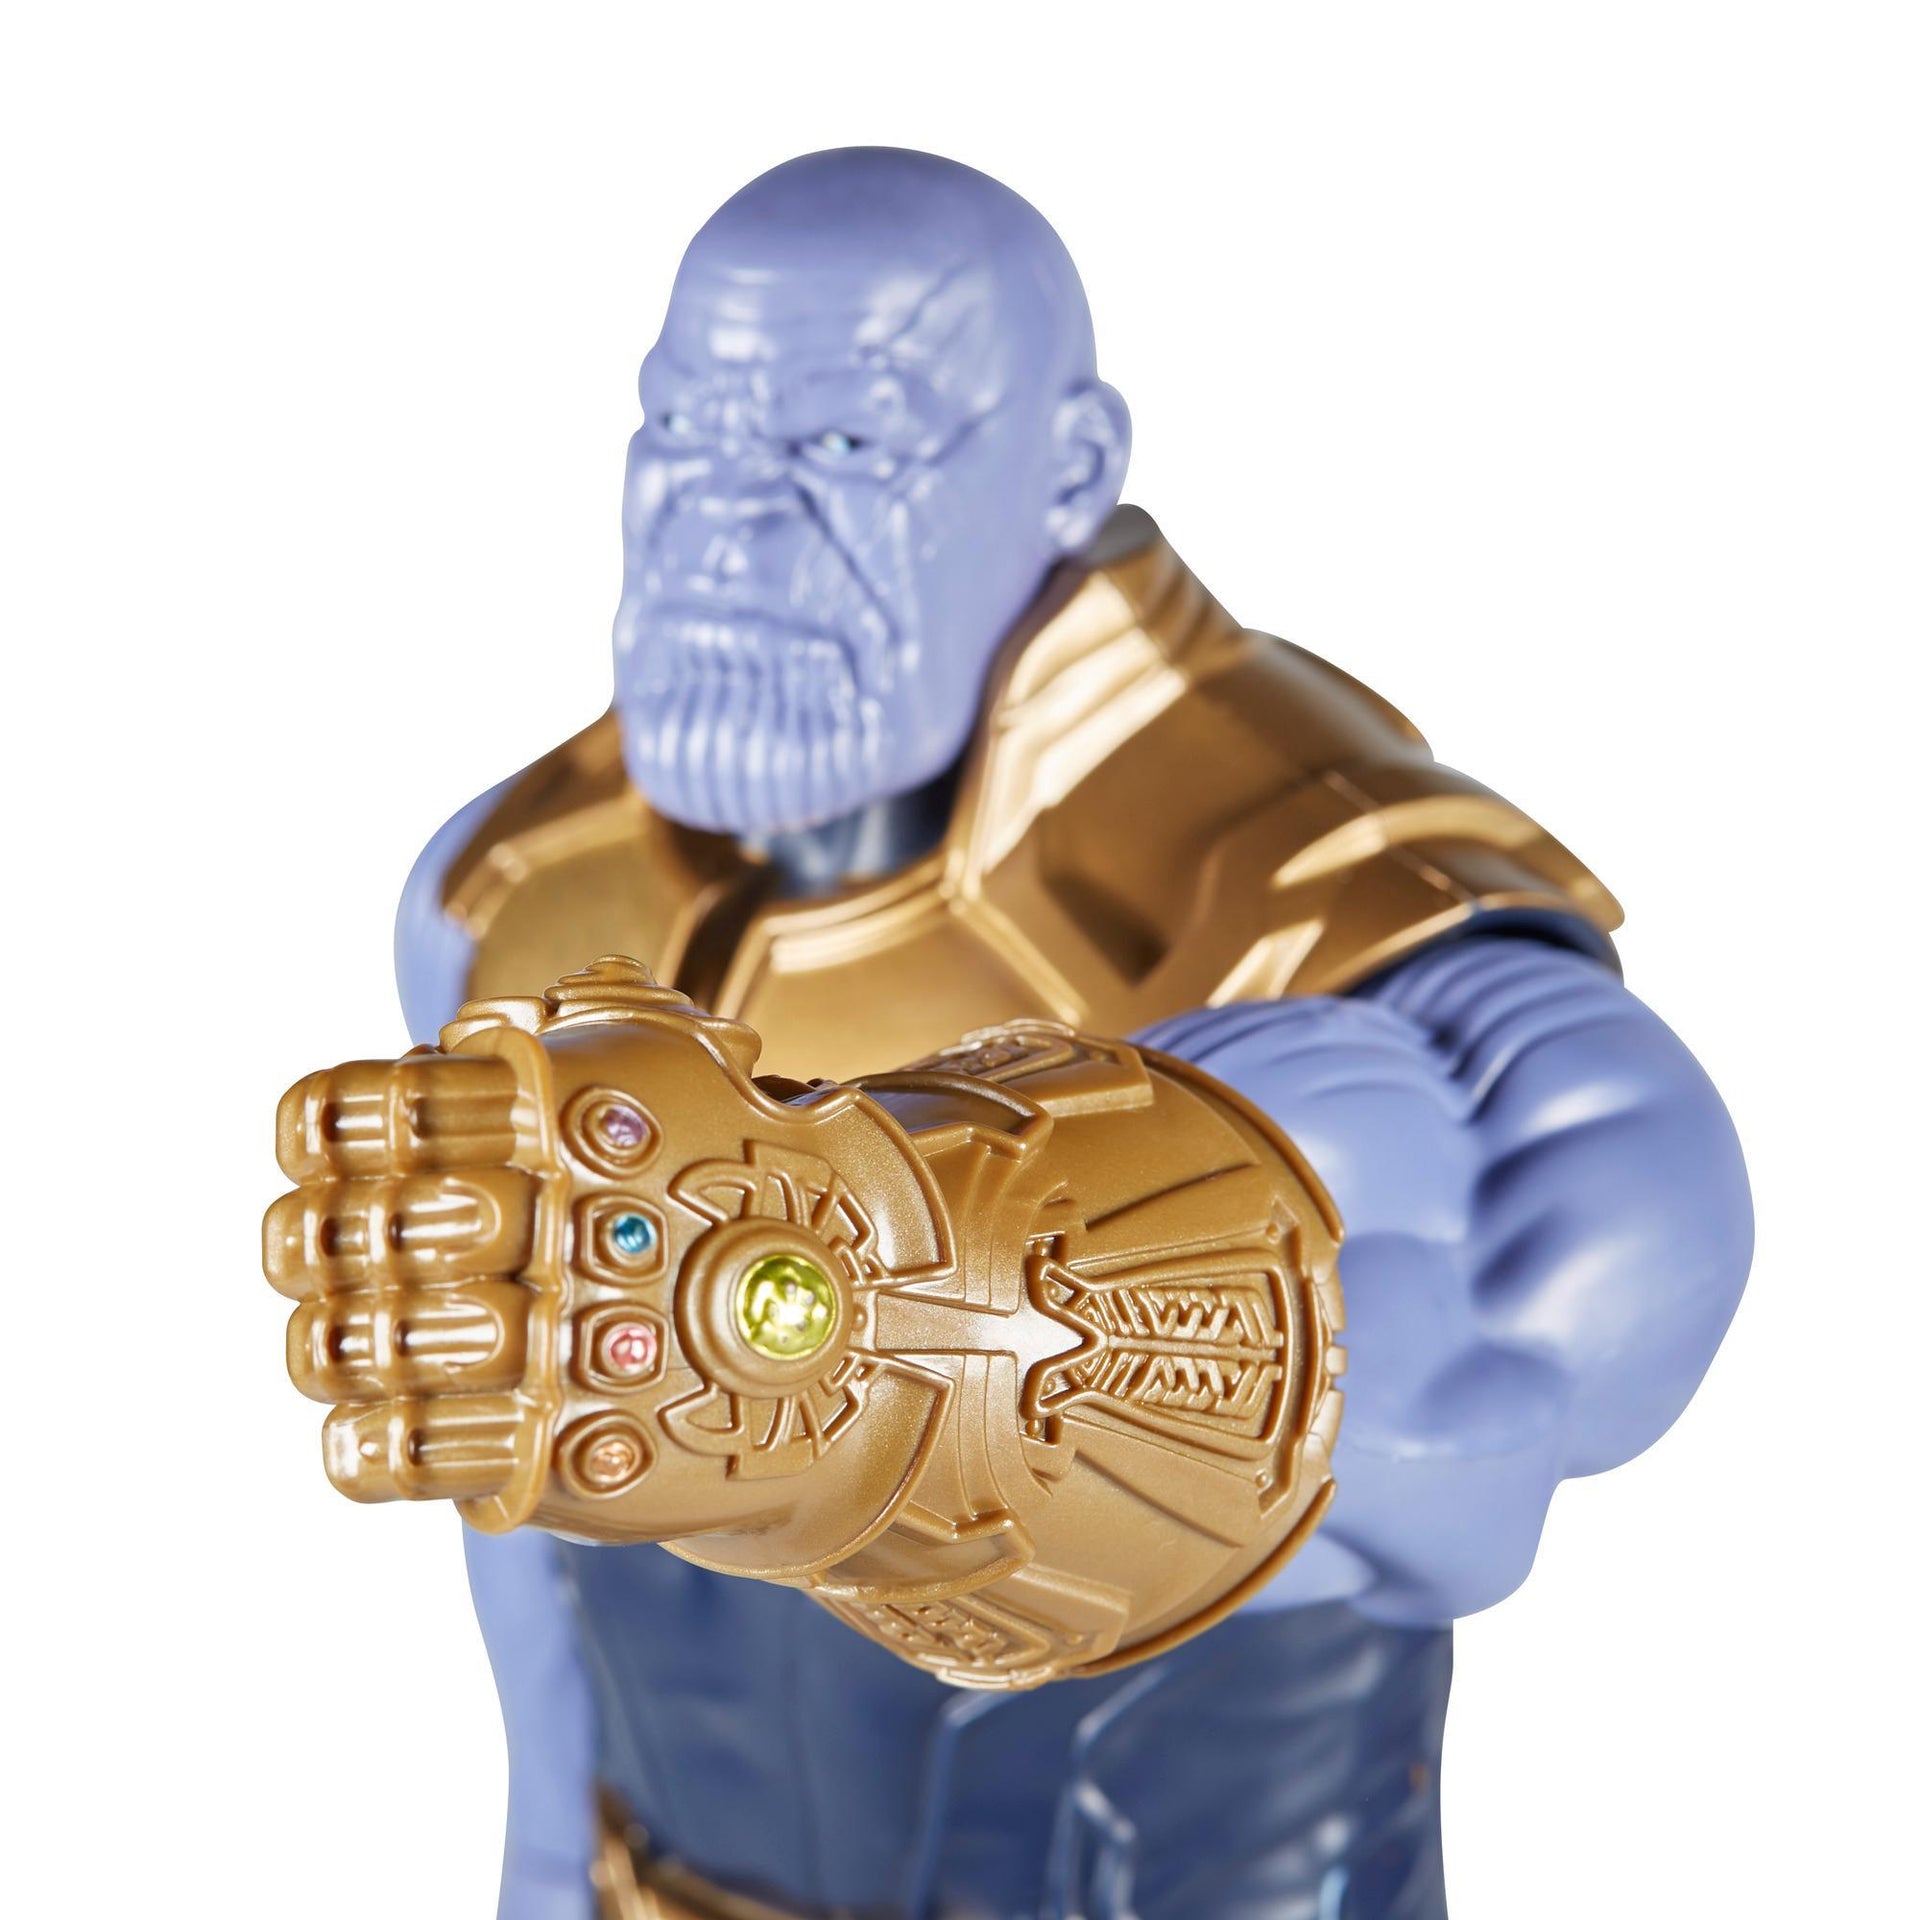 Marvel Infinity War Titan Hero Series Thanos with Titan Hero Power FX Port - Nerd Arena